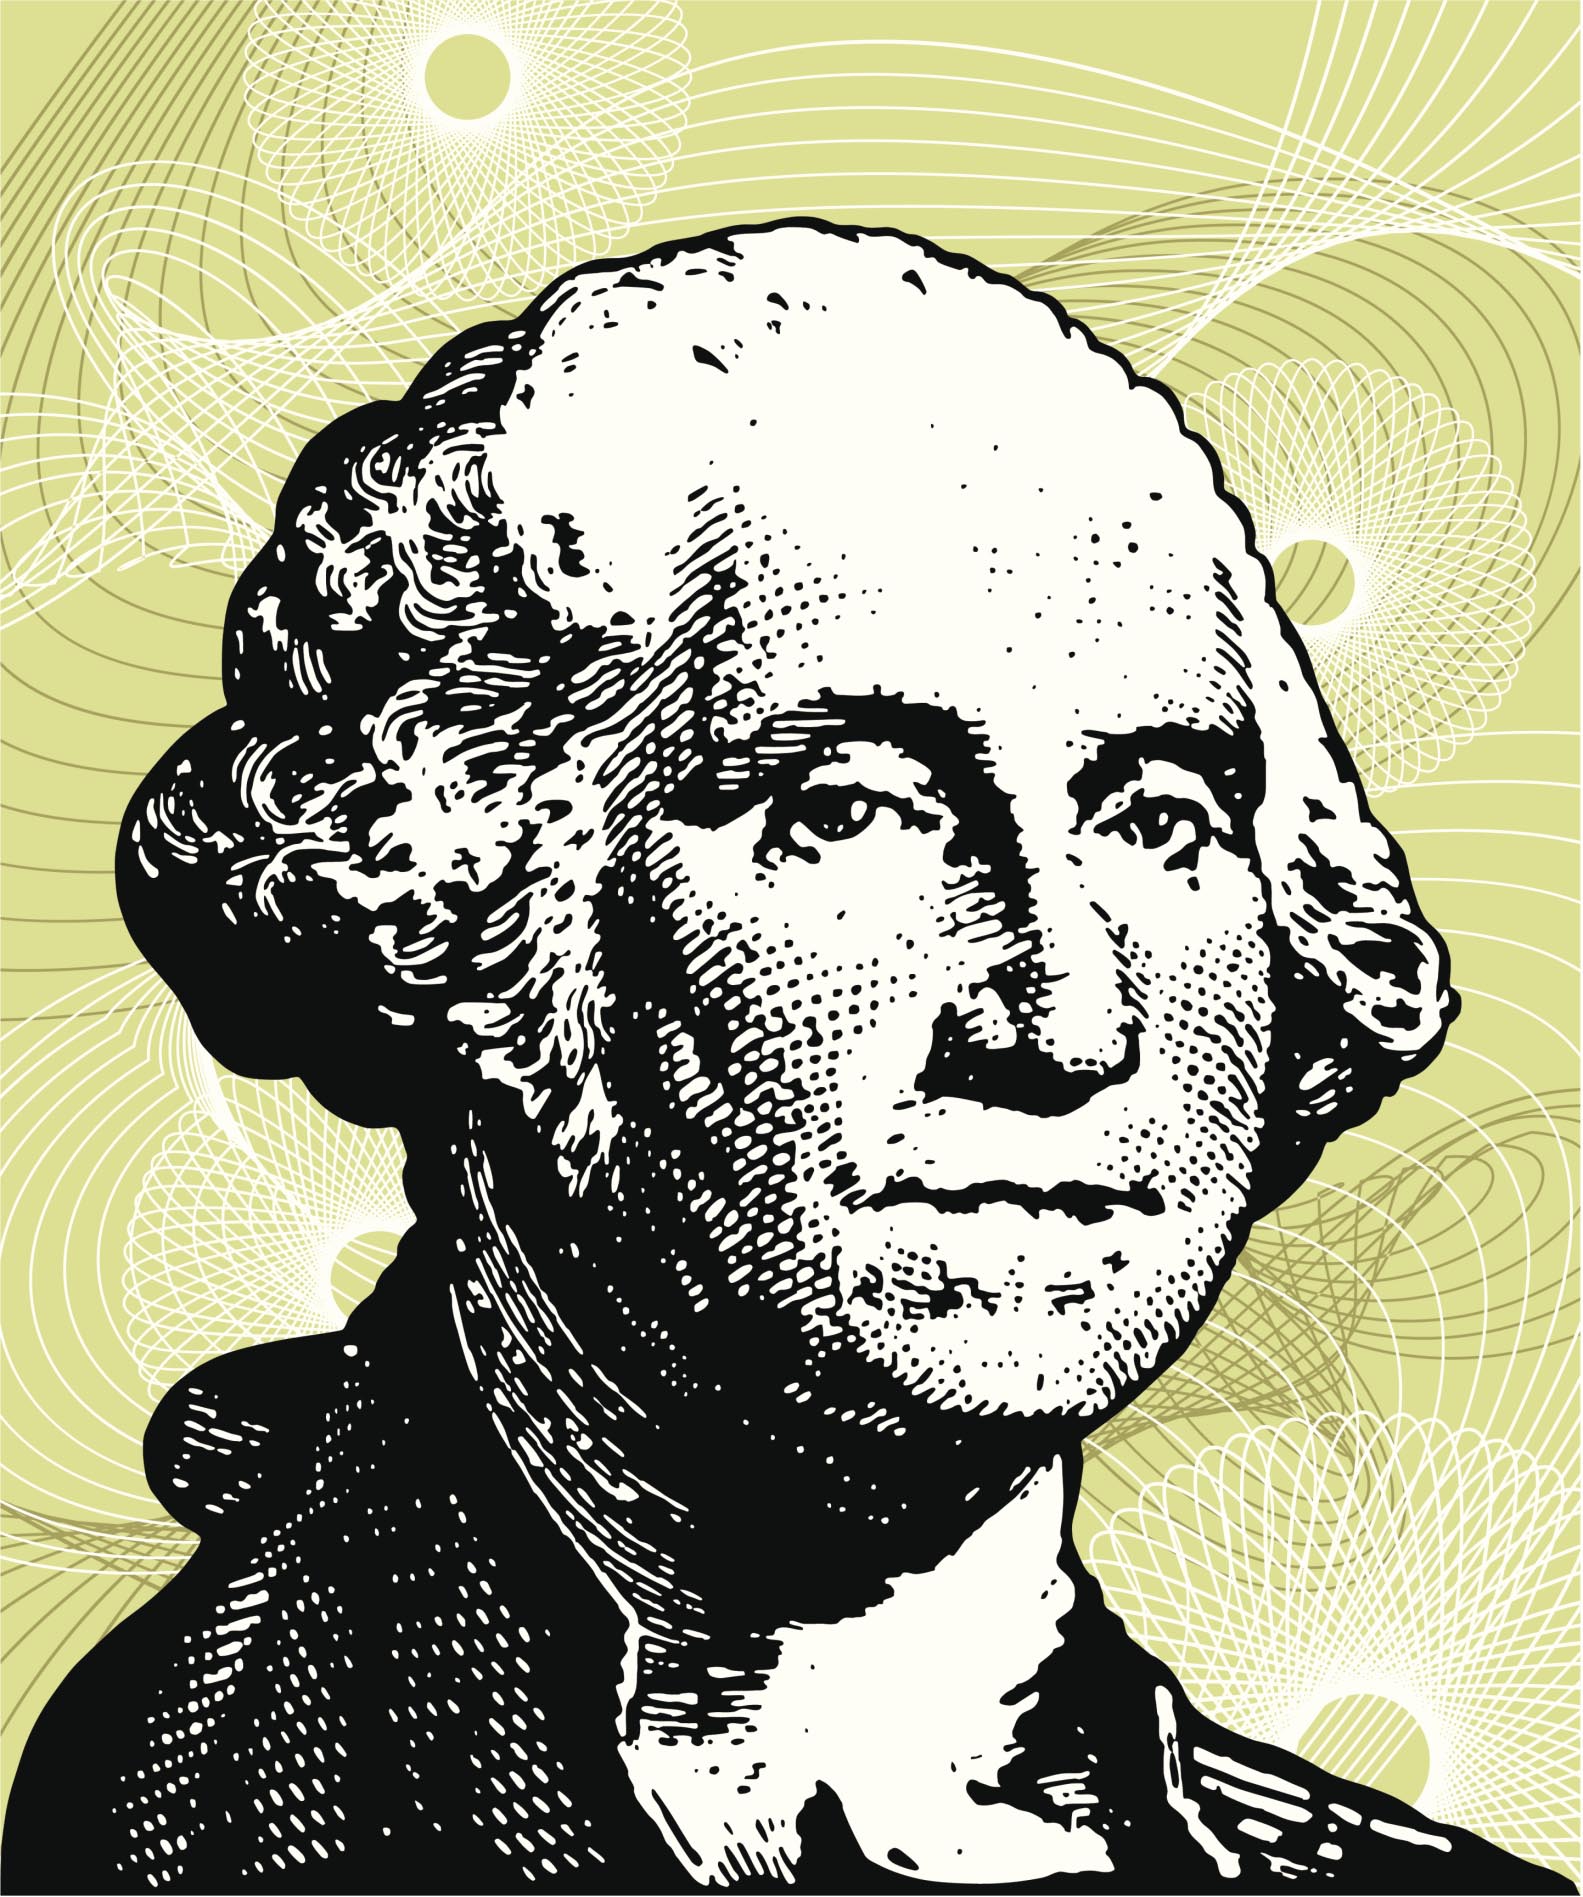 PRESIDENT GEORGE WASHINGTON MONEY BILL CURRENCY GREEN BLACK WHITE Vinyl Decal Sticker